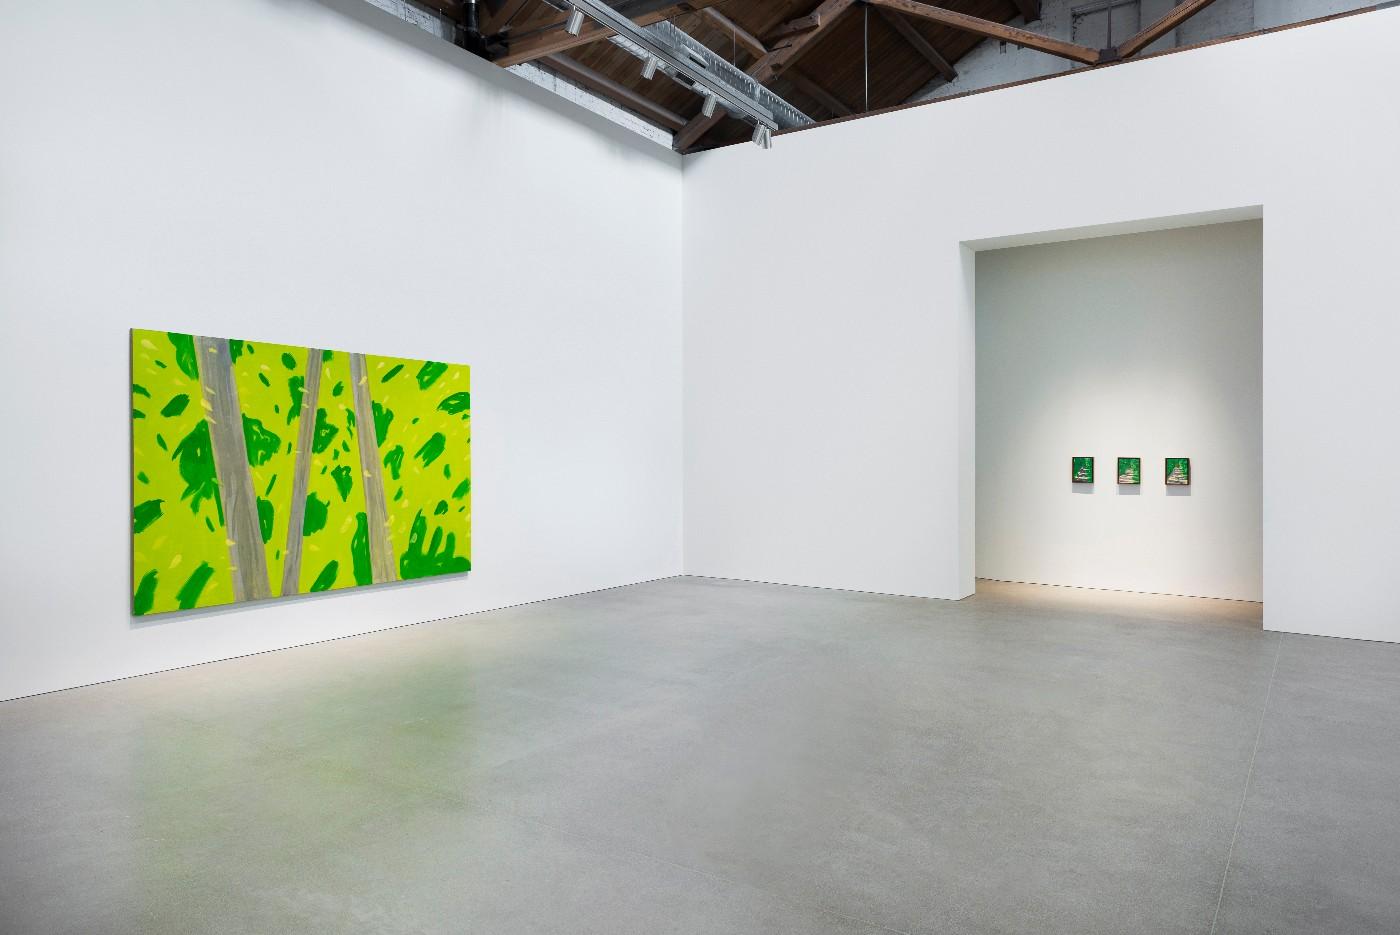 Alex Katz: Grass and Trees